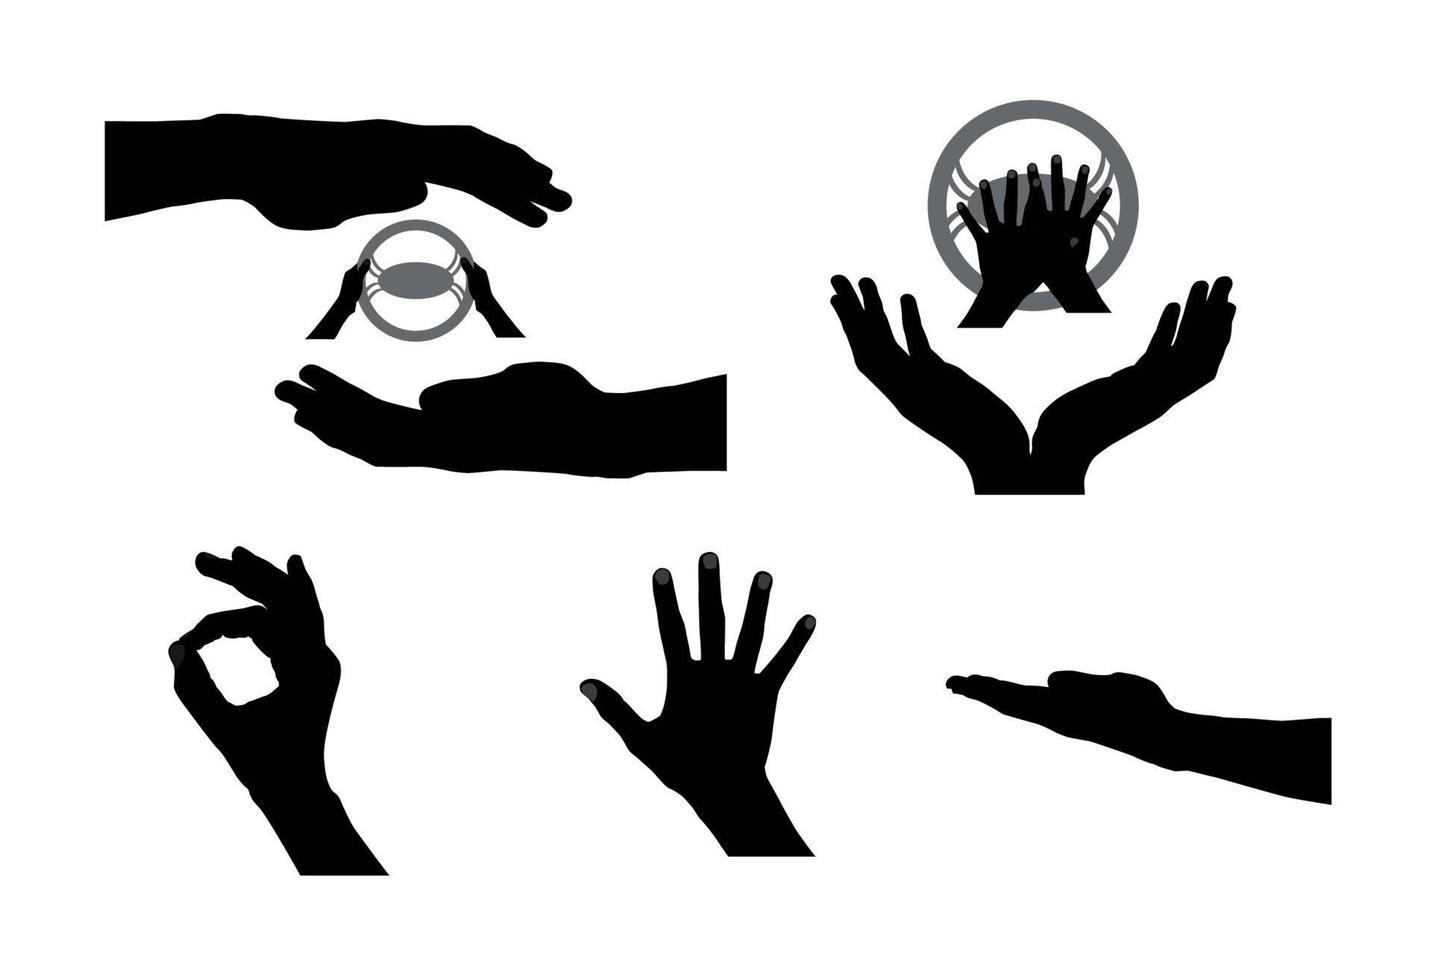 Black Set of Hand. Vector Illustration